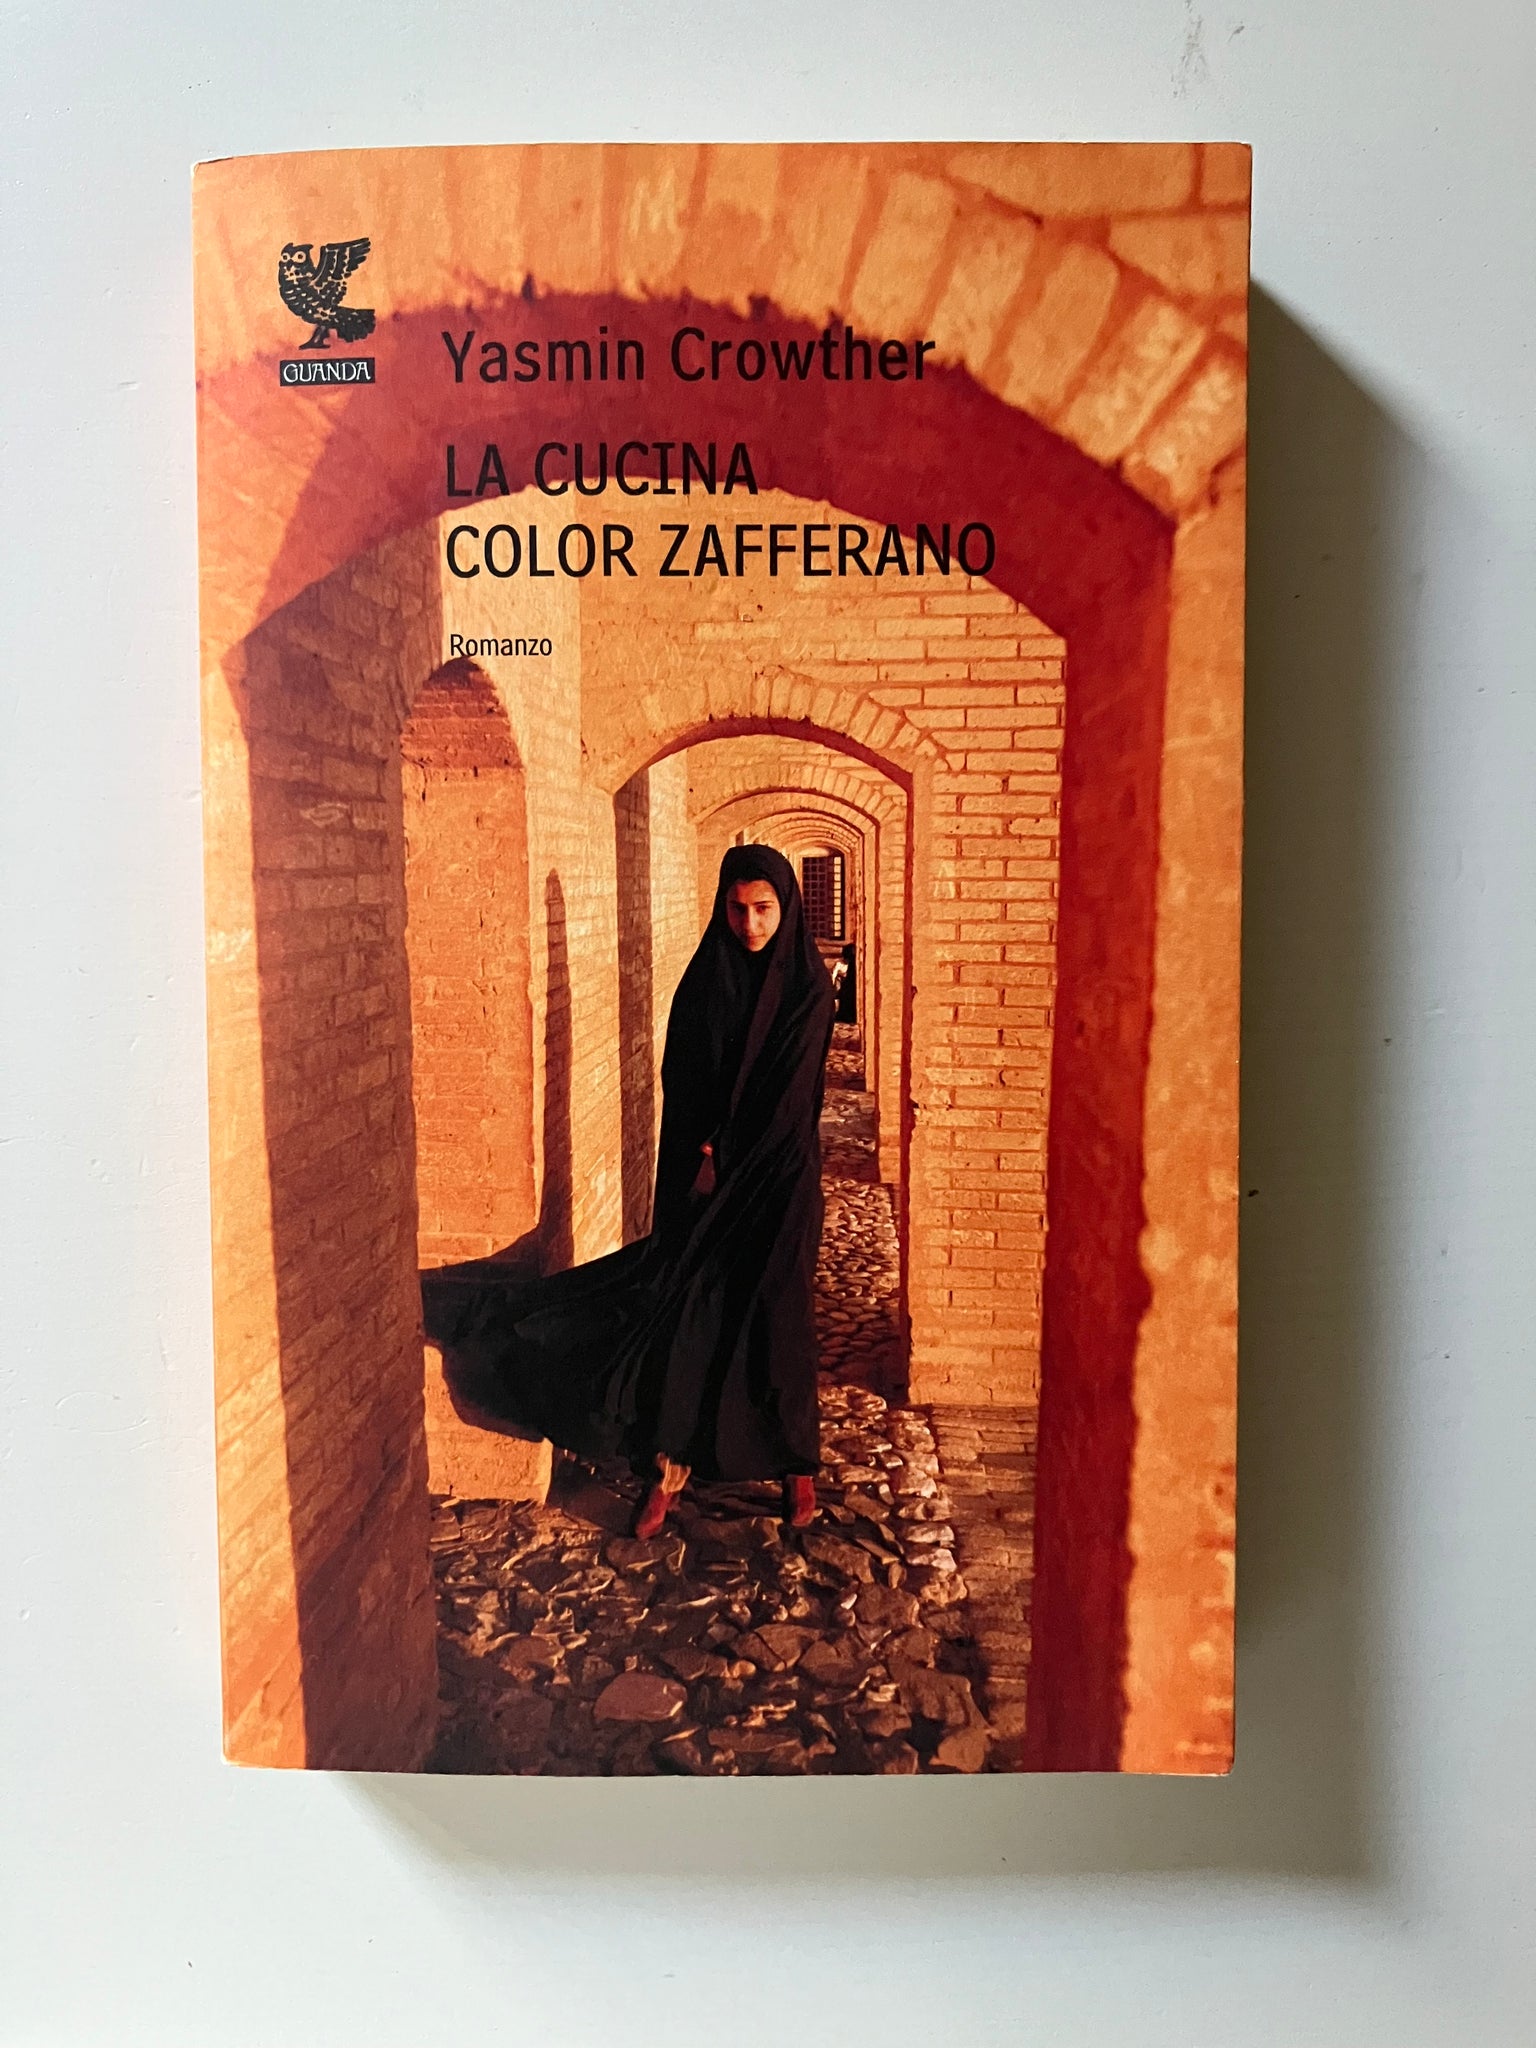 Yasmin Crowther - La cucina color zafferano